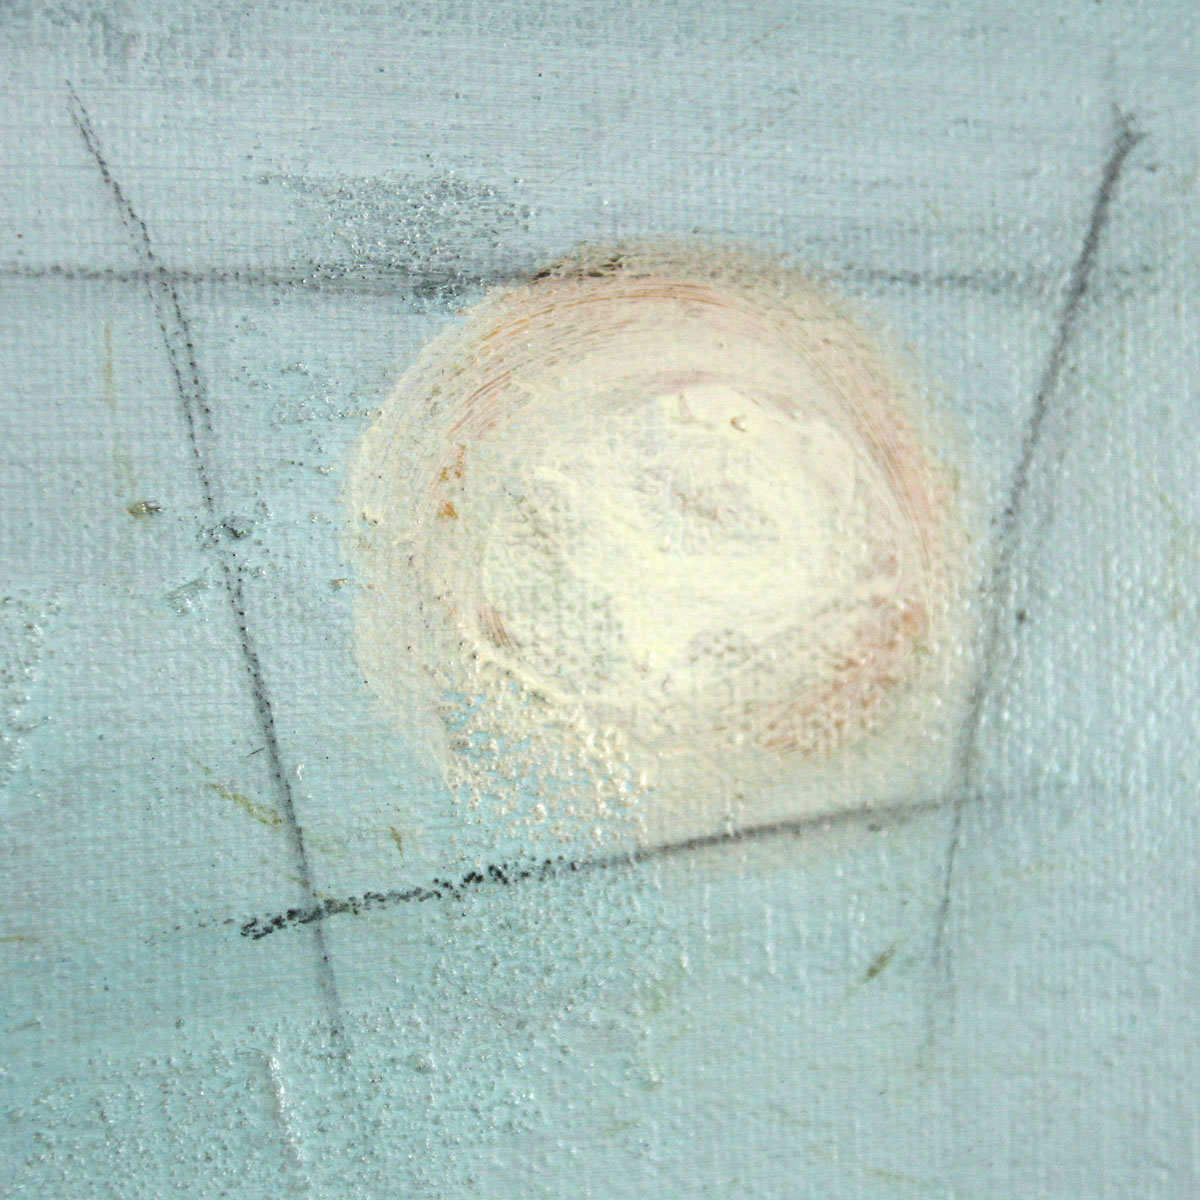 Abstrakte Acrylmalerei, M.Rick: "Landscape II" (A)